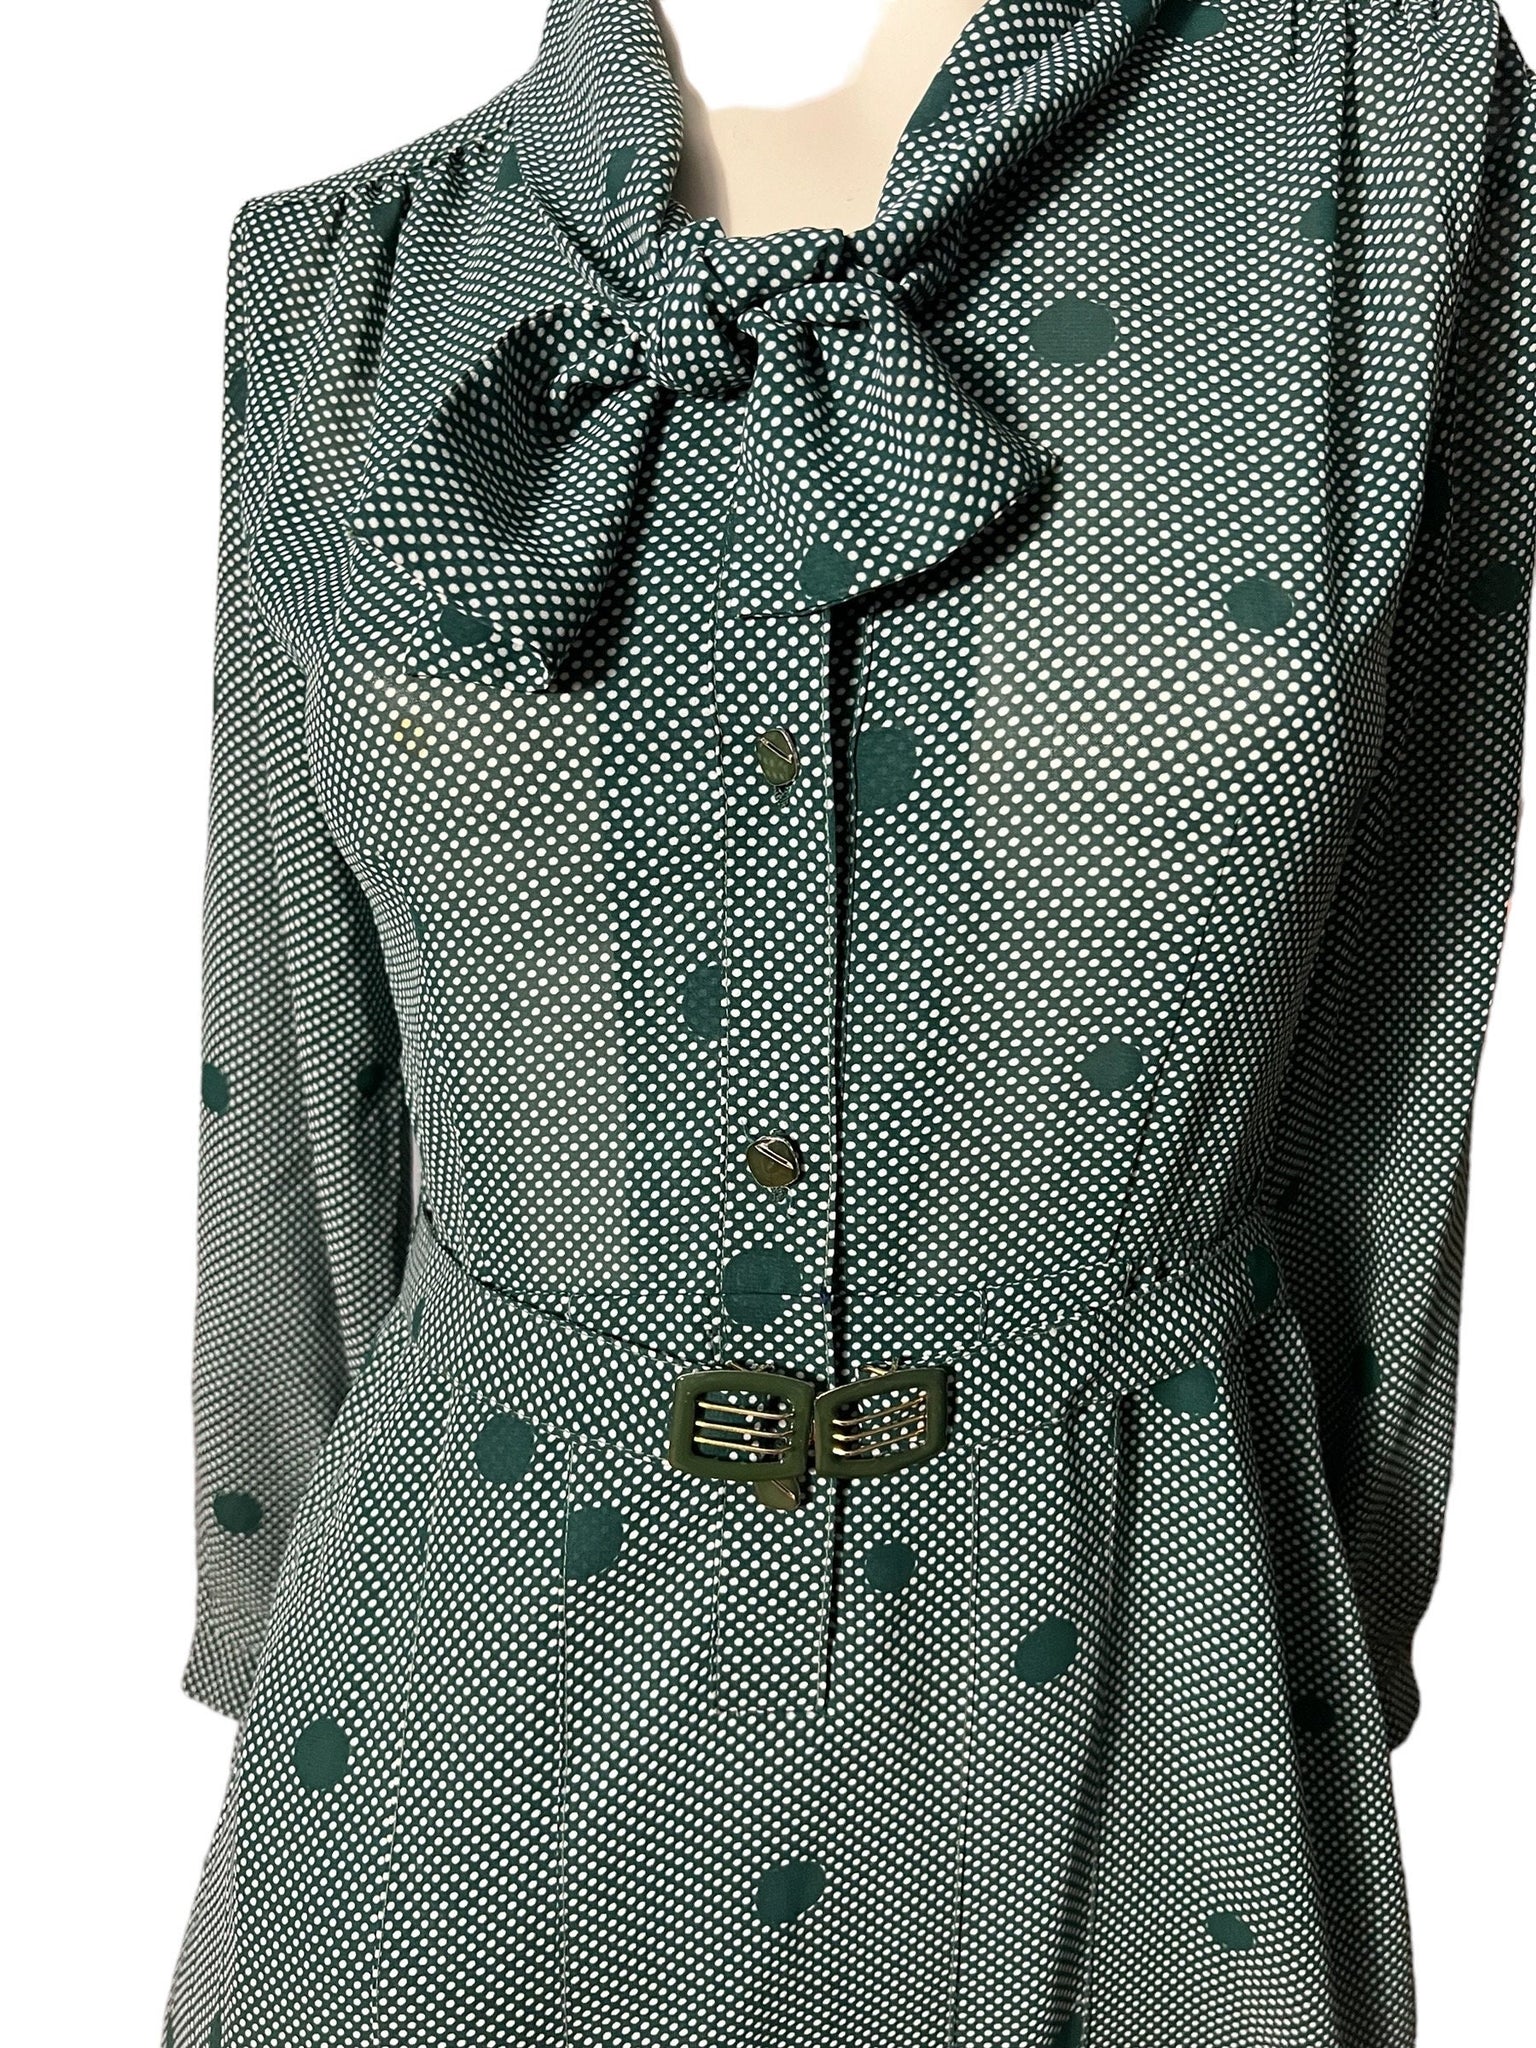 Vintage 40’s style green rayon dress M